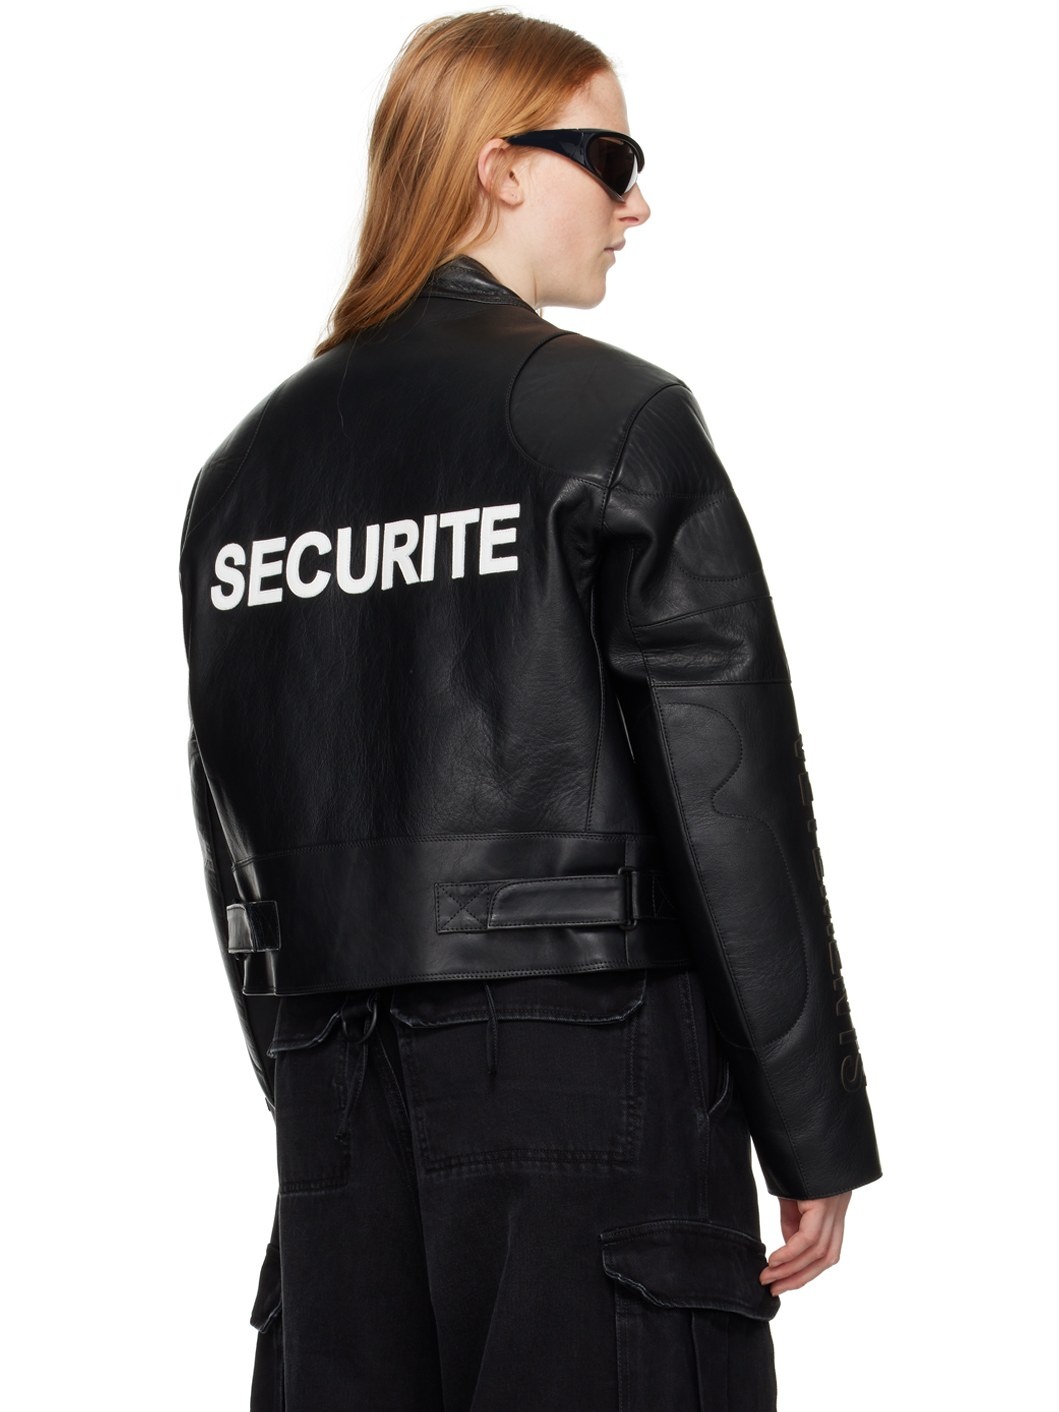 Black Securite Motorcross Leather Jacket - 3